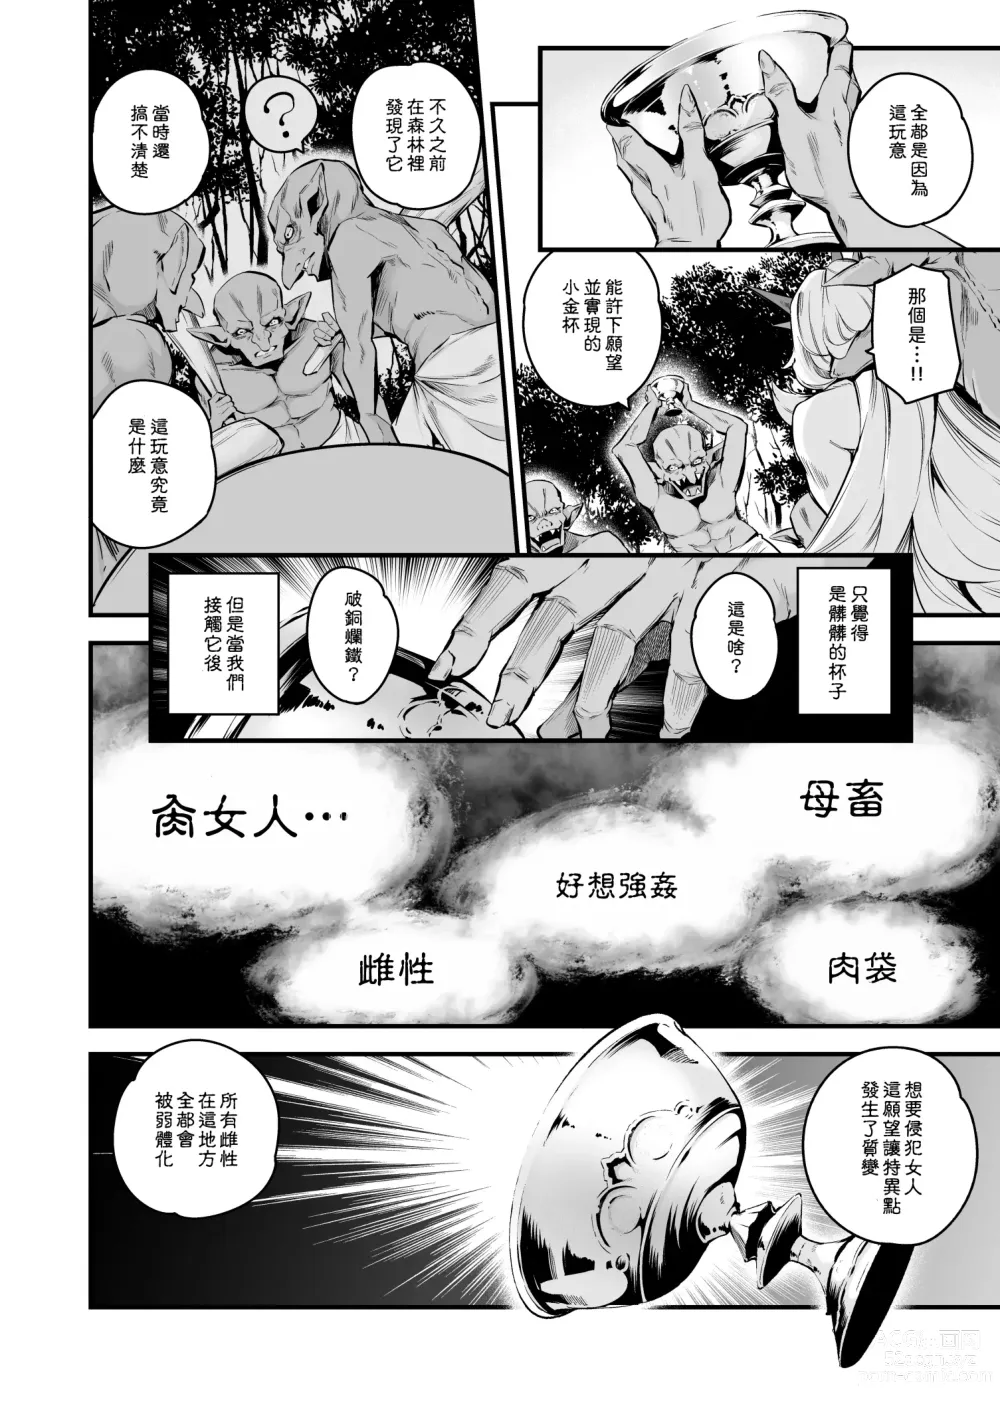 Page 9 of doujinshi Lv1 ni Naru Tokuiten  - Singularity that becomes Lv1